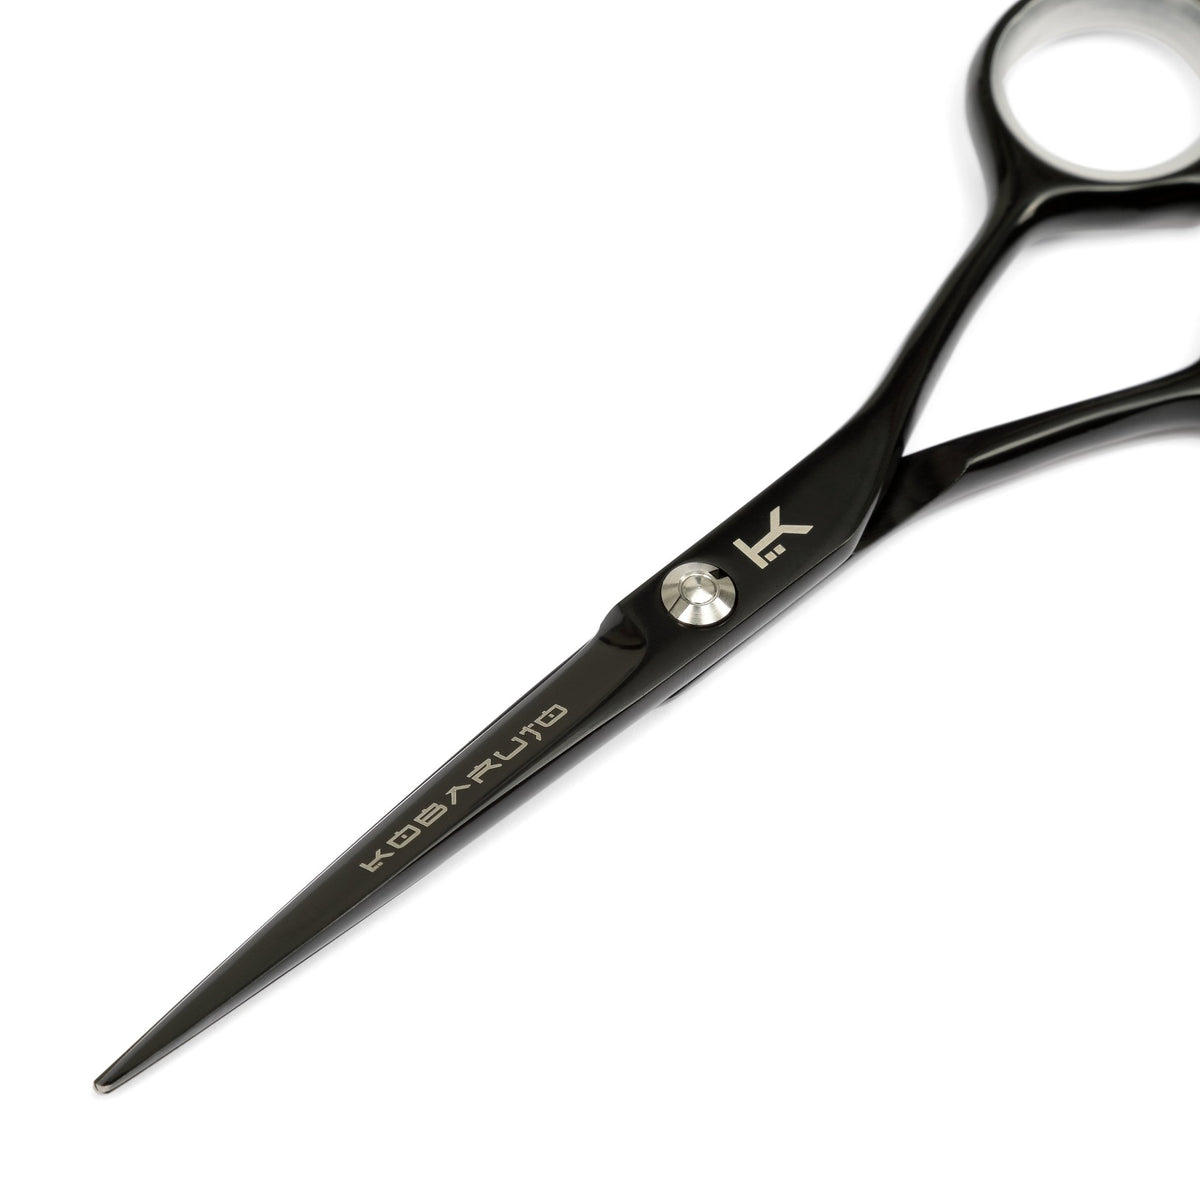 Professional Hair Scissors Shears 5.5 inch Black Cobalt - Beauty Hair Products Ltd